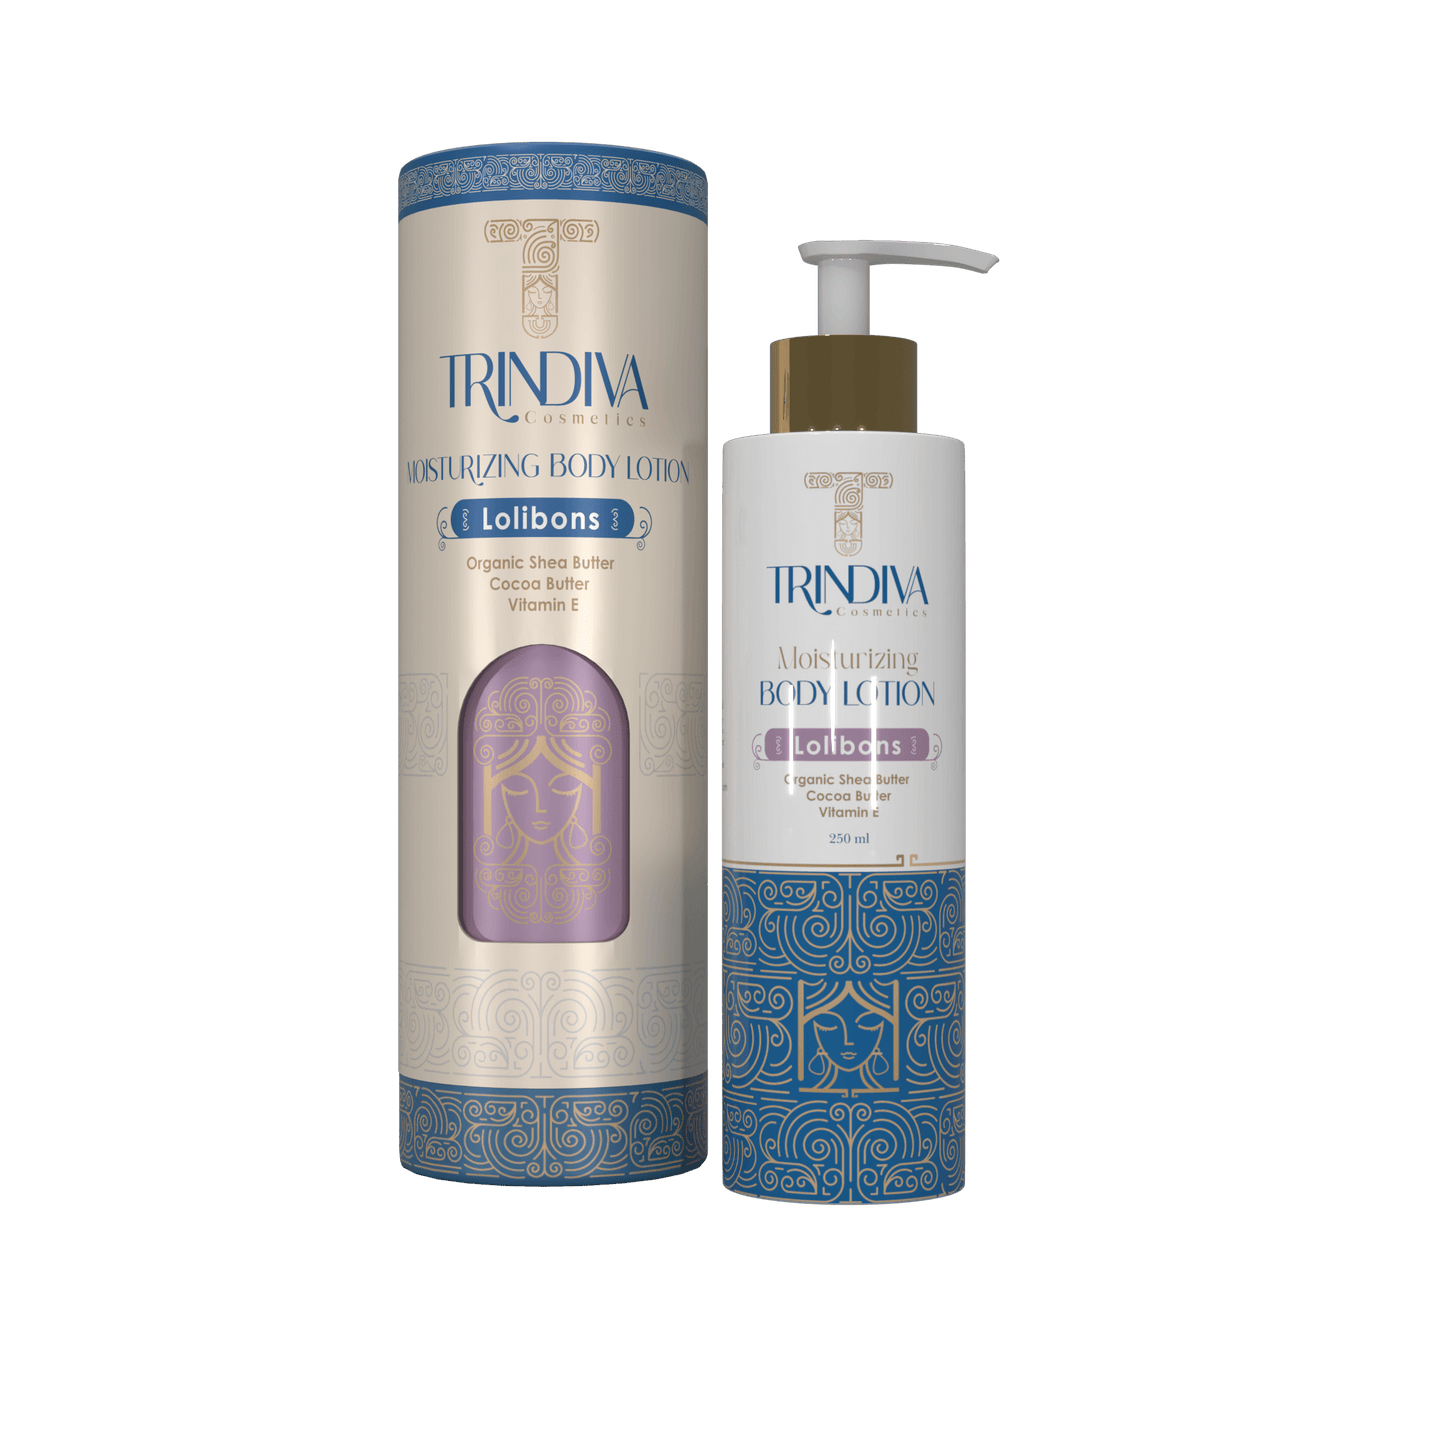 Trindiva body lotion (lollibons) - 250 ml - Beauty Bounty